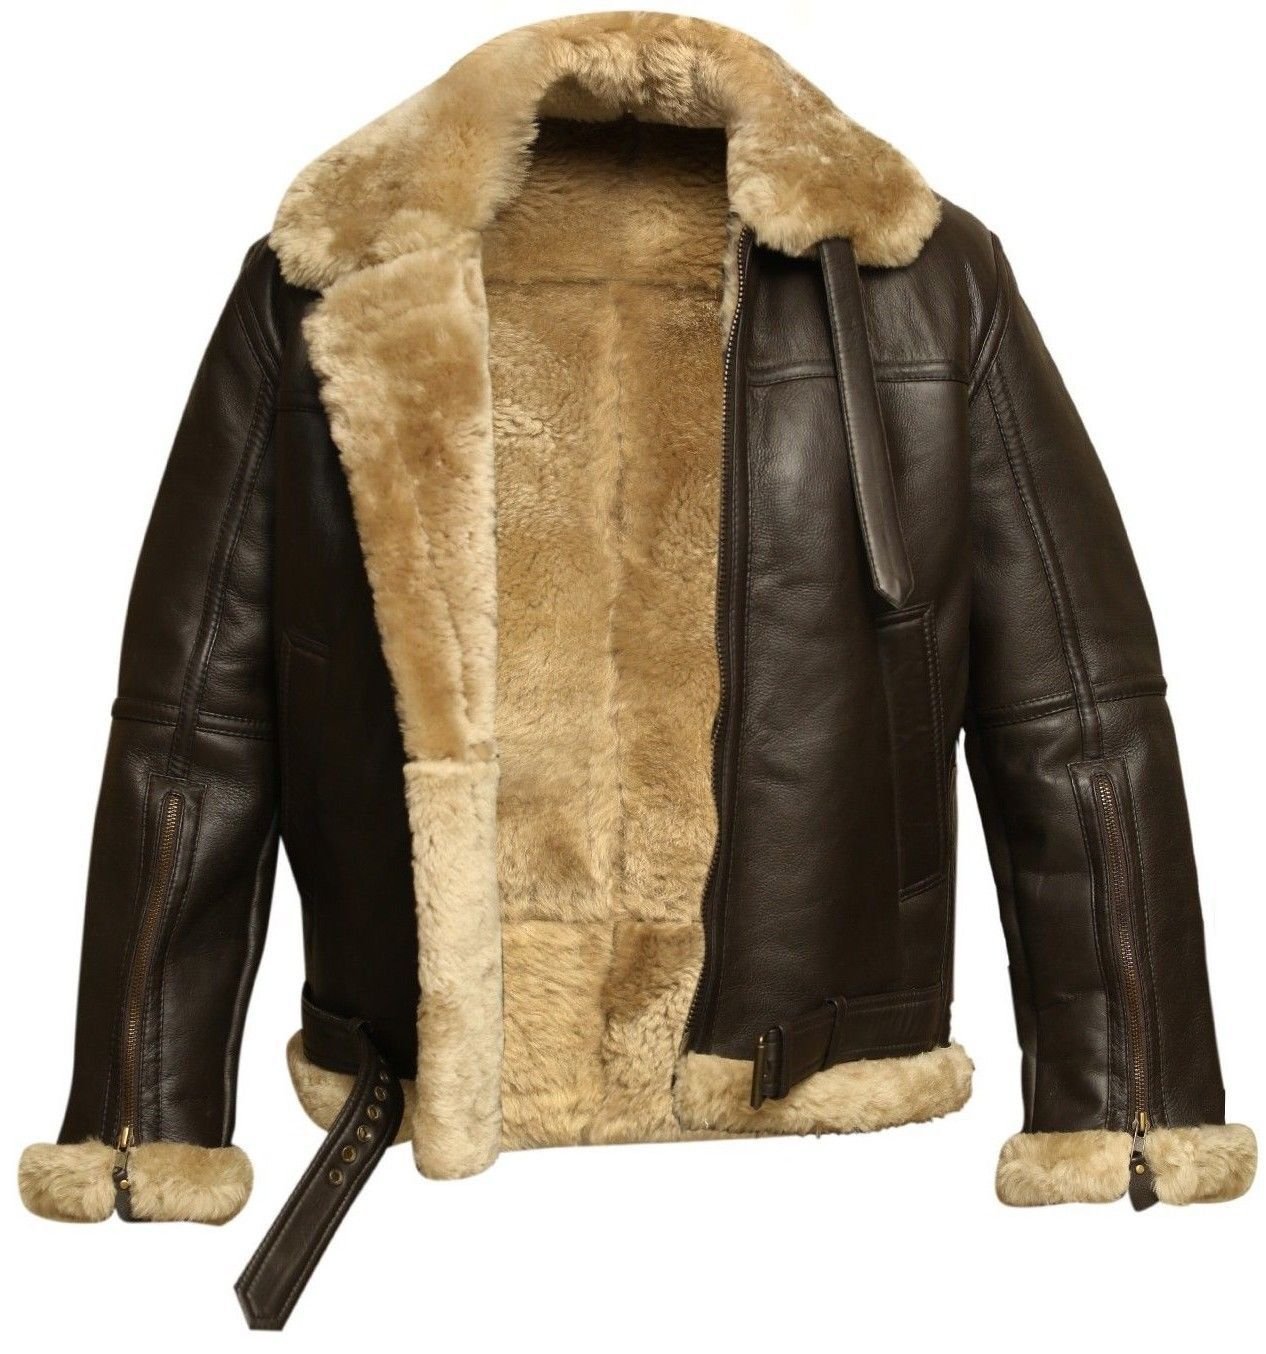 Real Sheepskin Leather Jacket for Sale